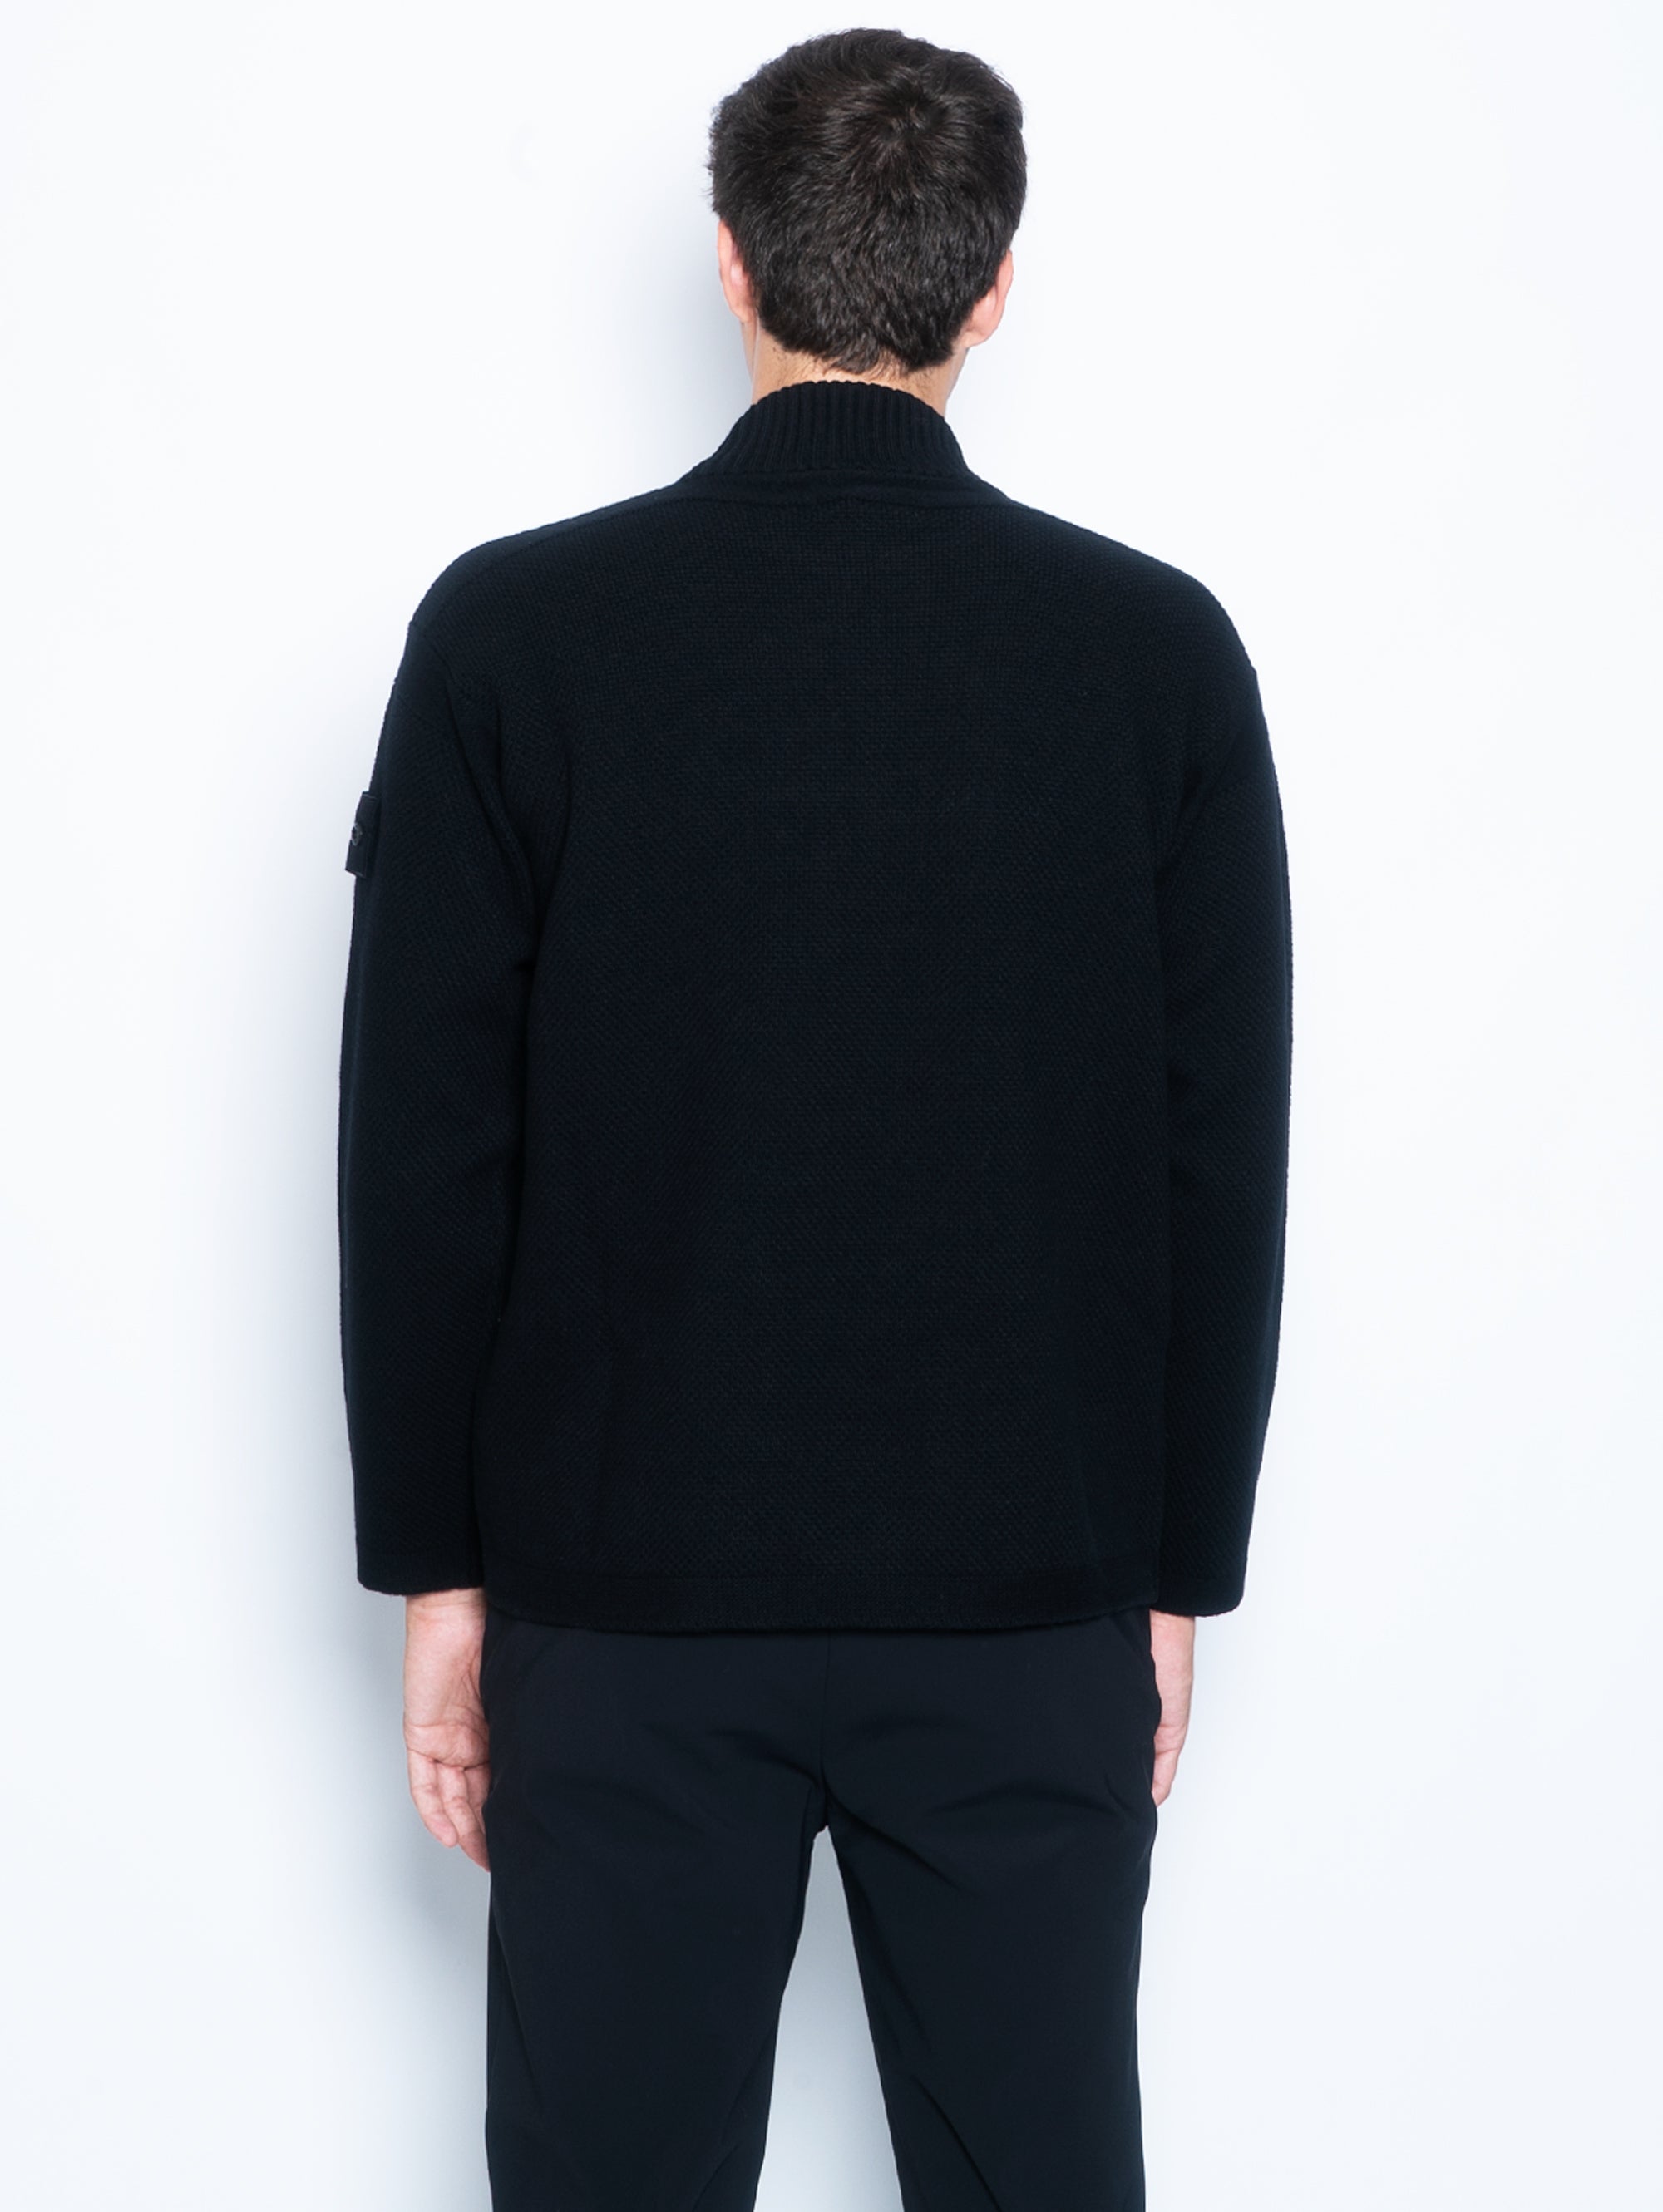 Ghost Piece Black Wool Sweater